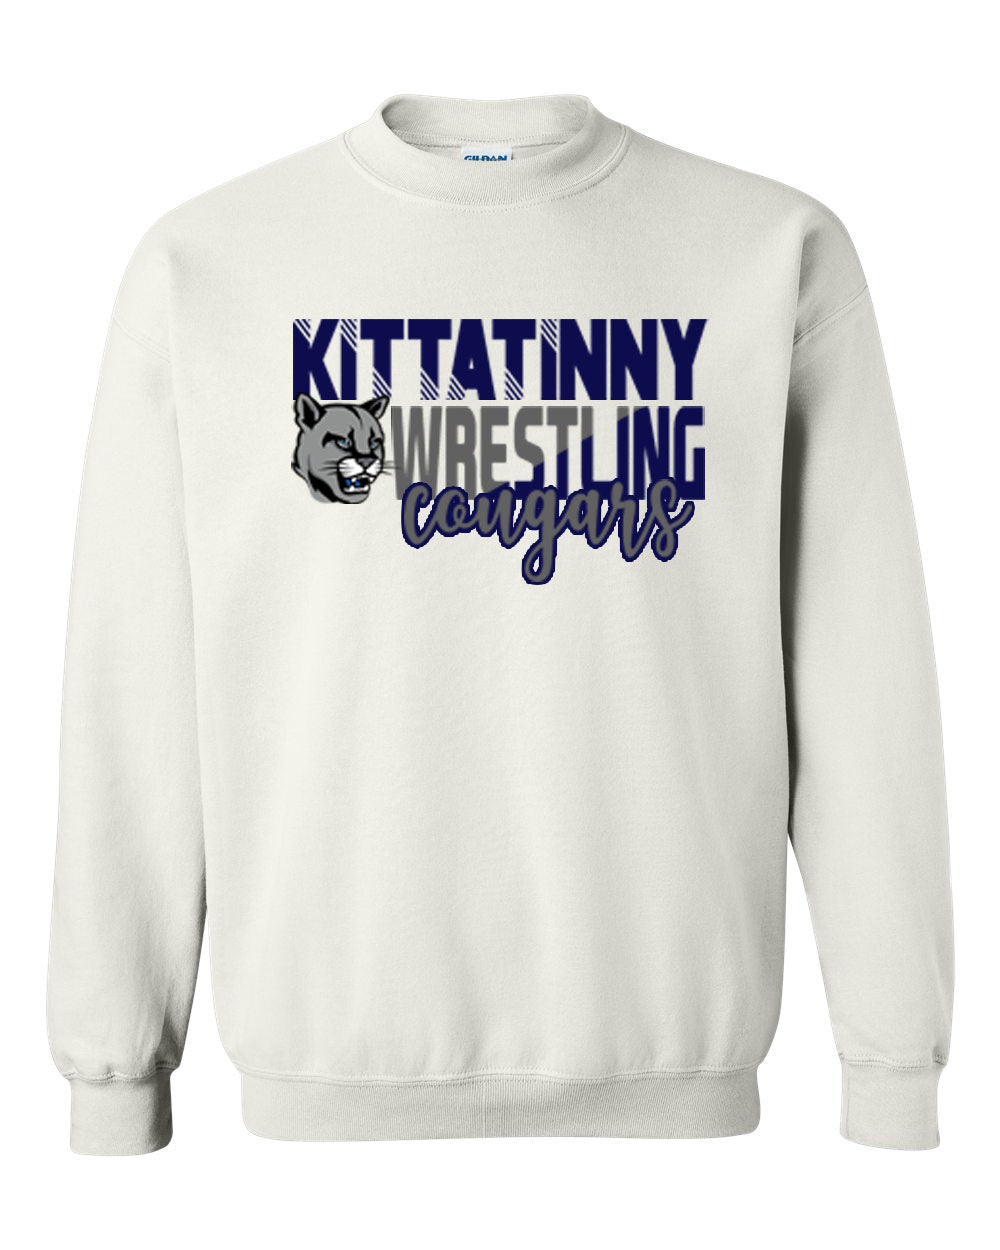 Kittatinny Wrestling Design 4 non hooded sweatshirt